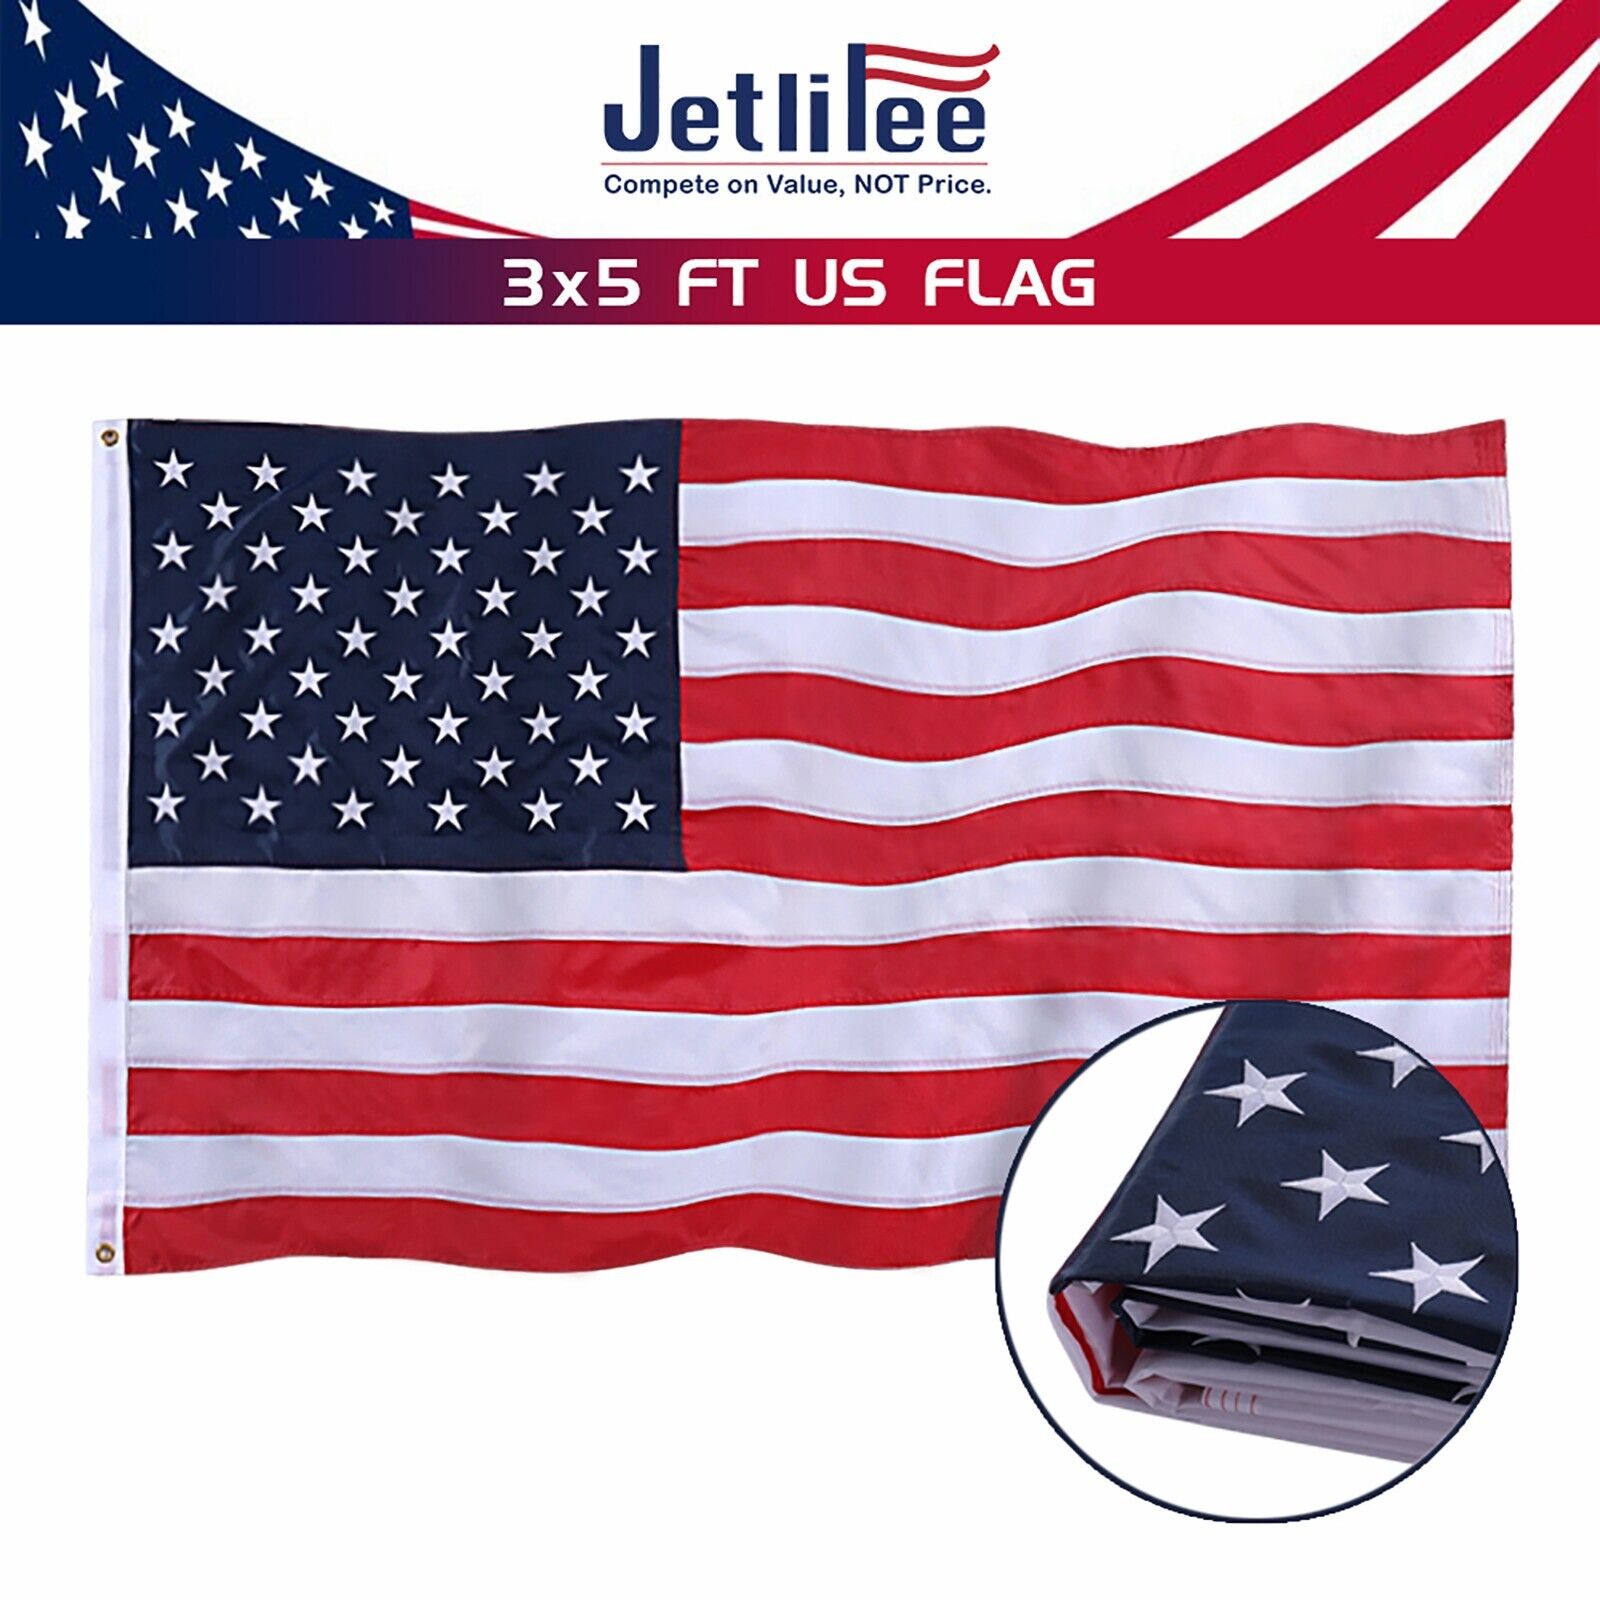 Jetlifee American Flag 3x5 ft US USA Flag UV Protected Embroidered Stars NYLON